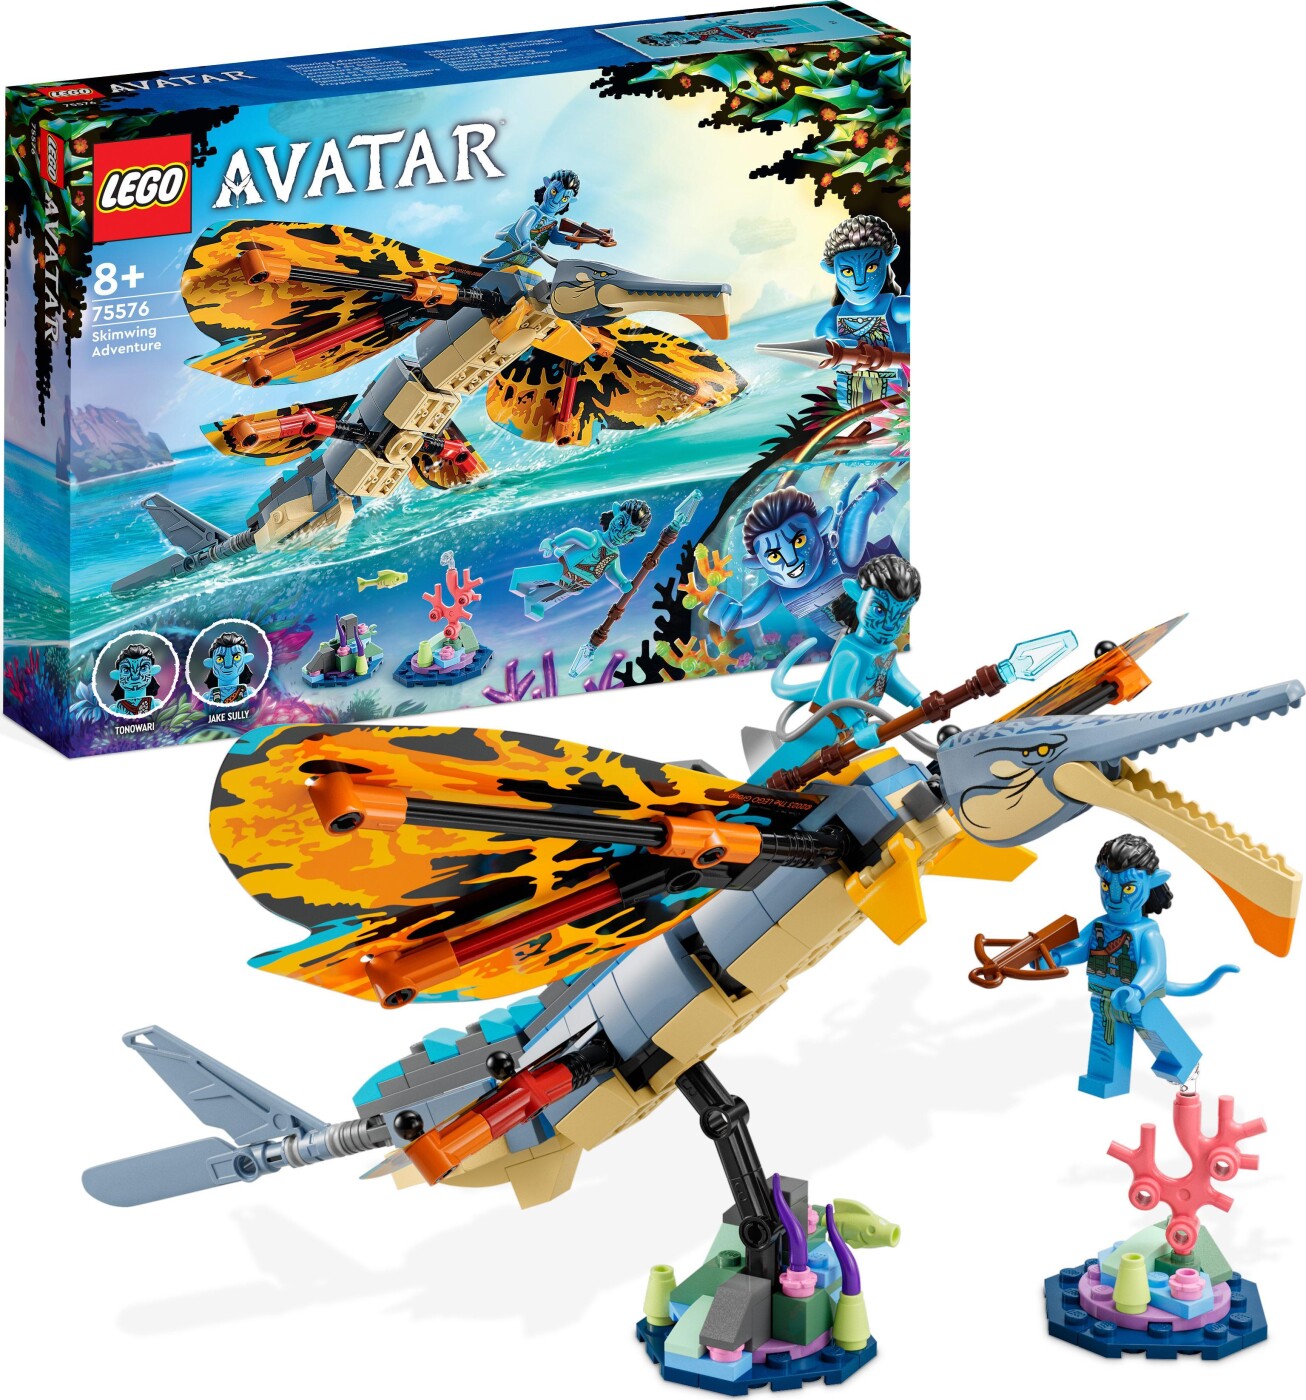 Billede af Lego Avatar - Skimwing Eventyr - 75576